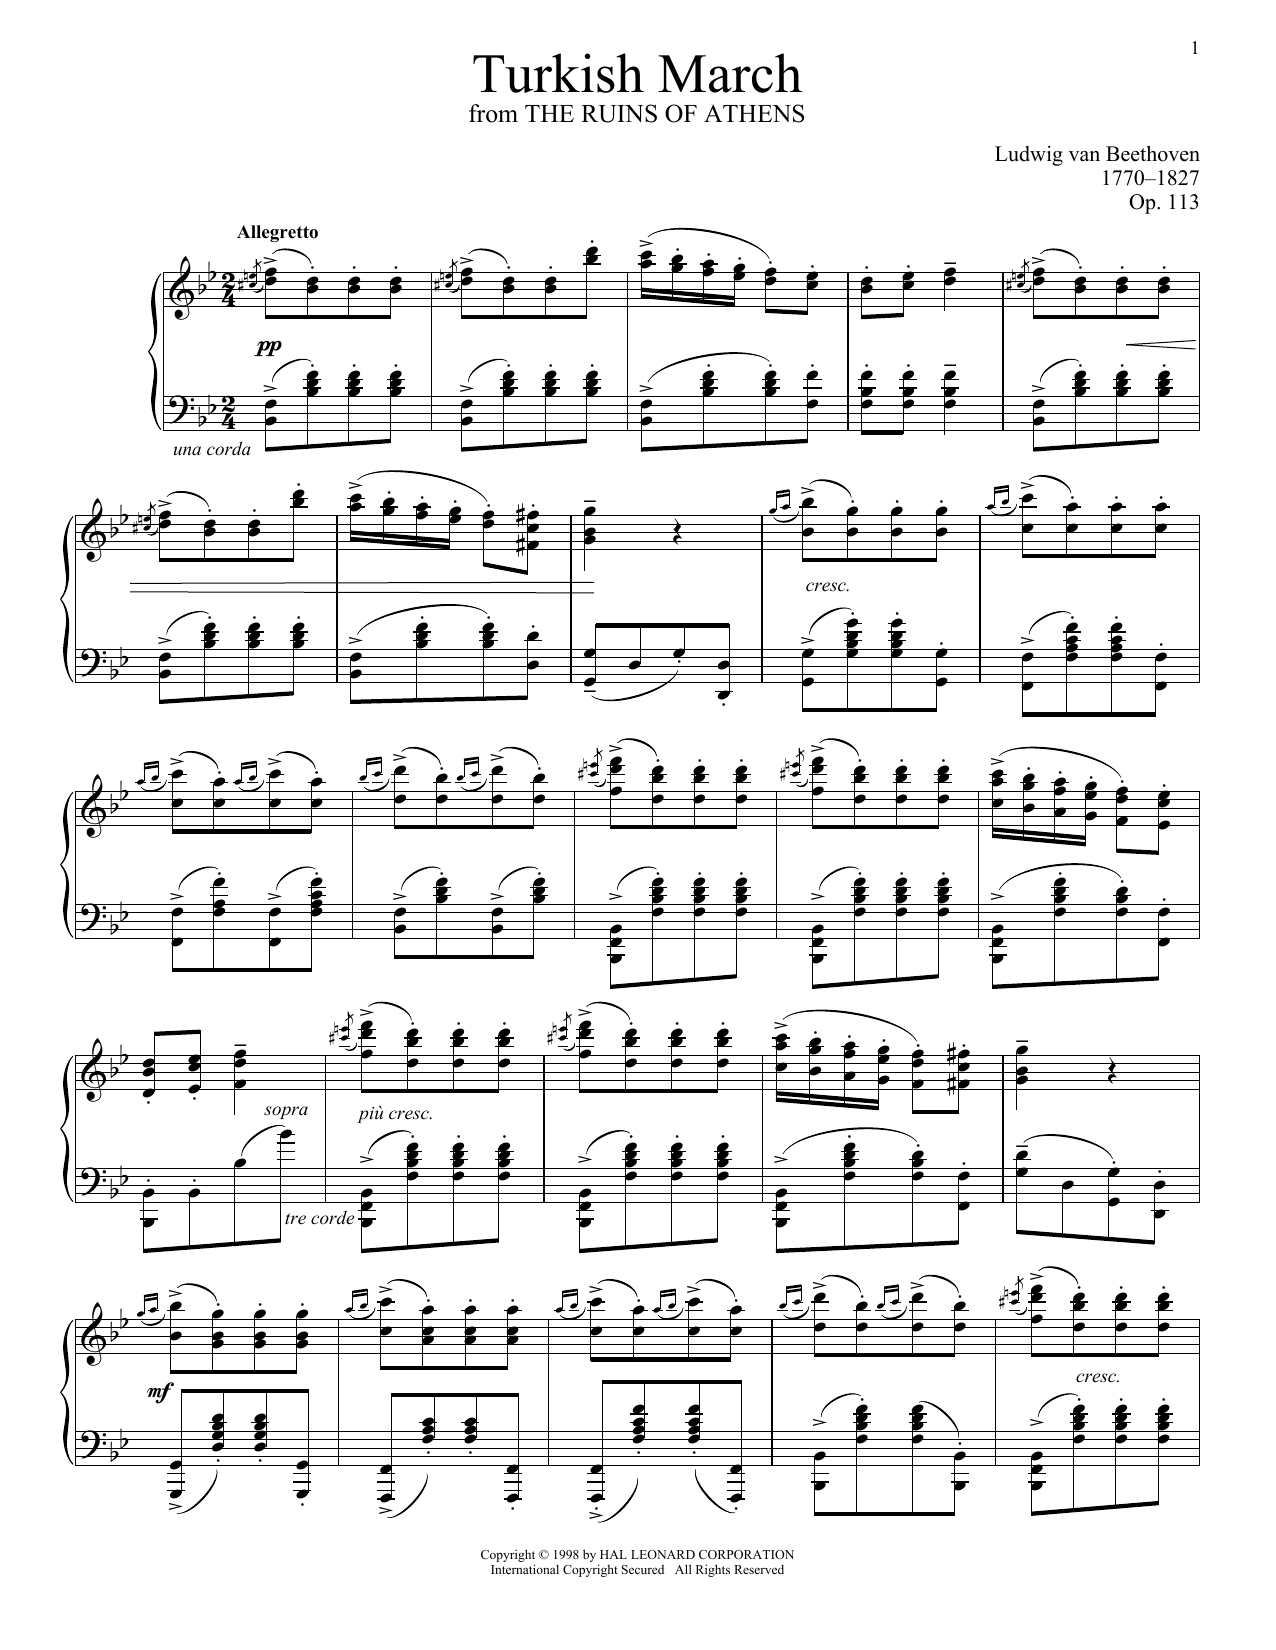 Ludwig van Beethoven Turkish March sheet music notes printable PDF score